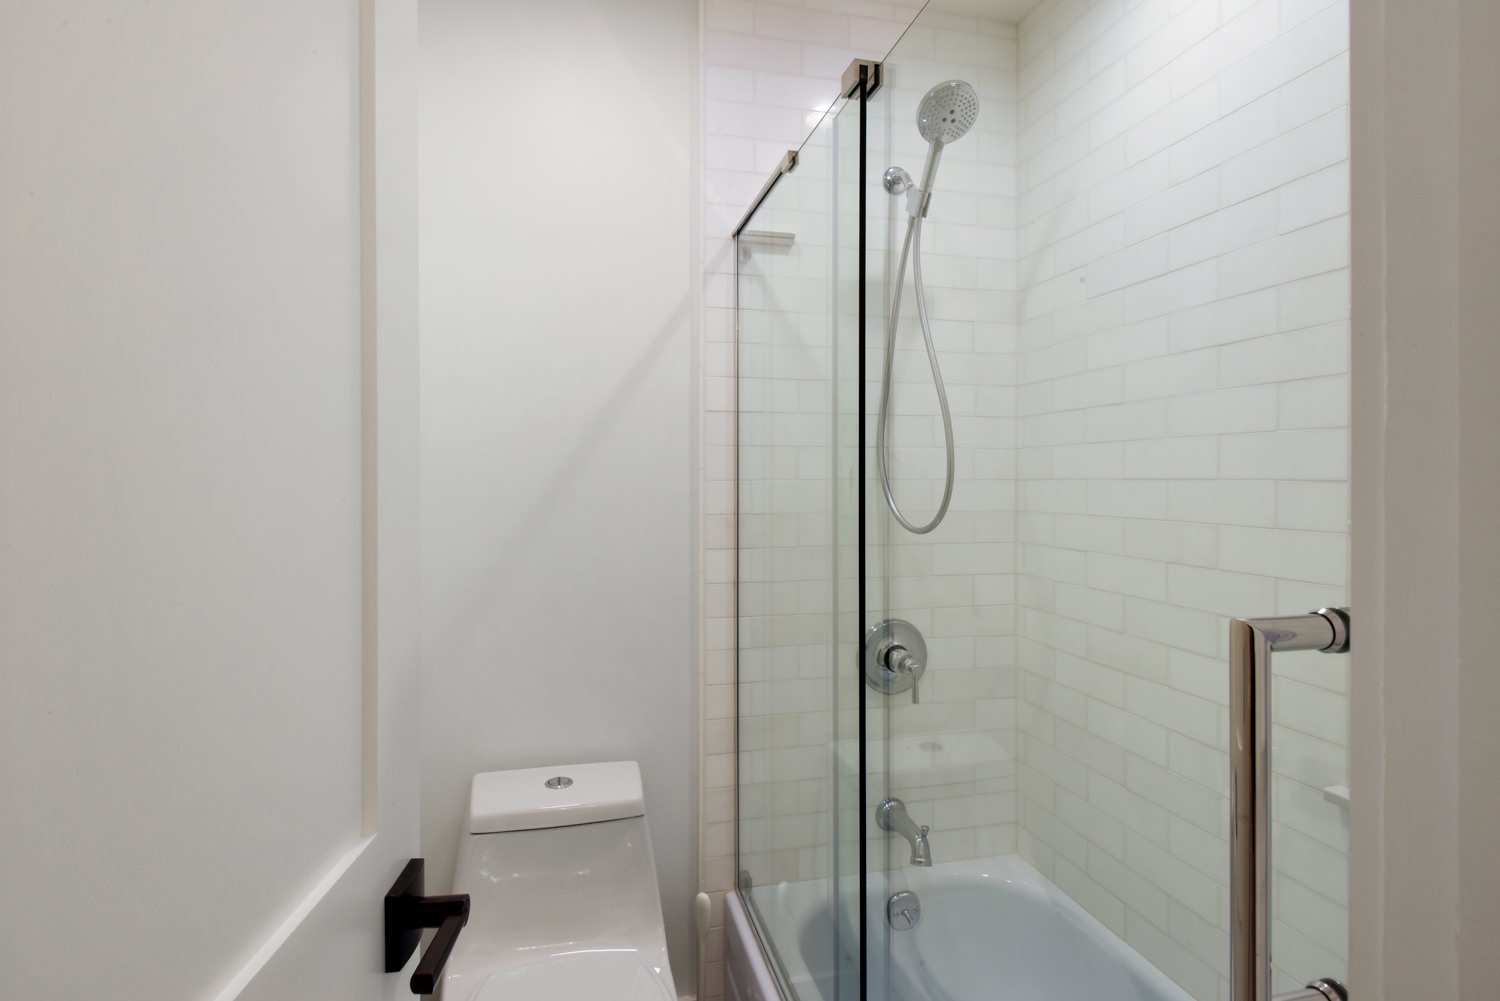 Bathroom 3 Jack & Jill style between bedroom 3 & 4 with shower/tub combo (1st floor)